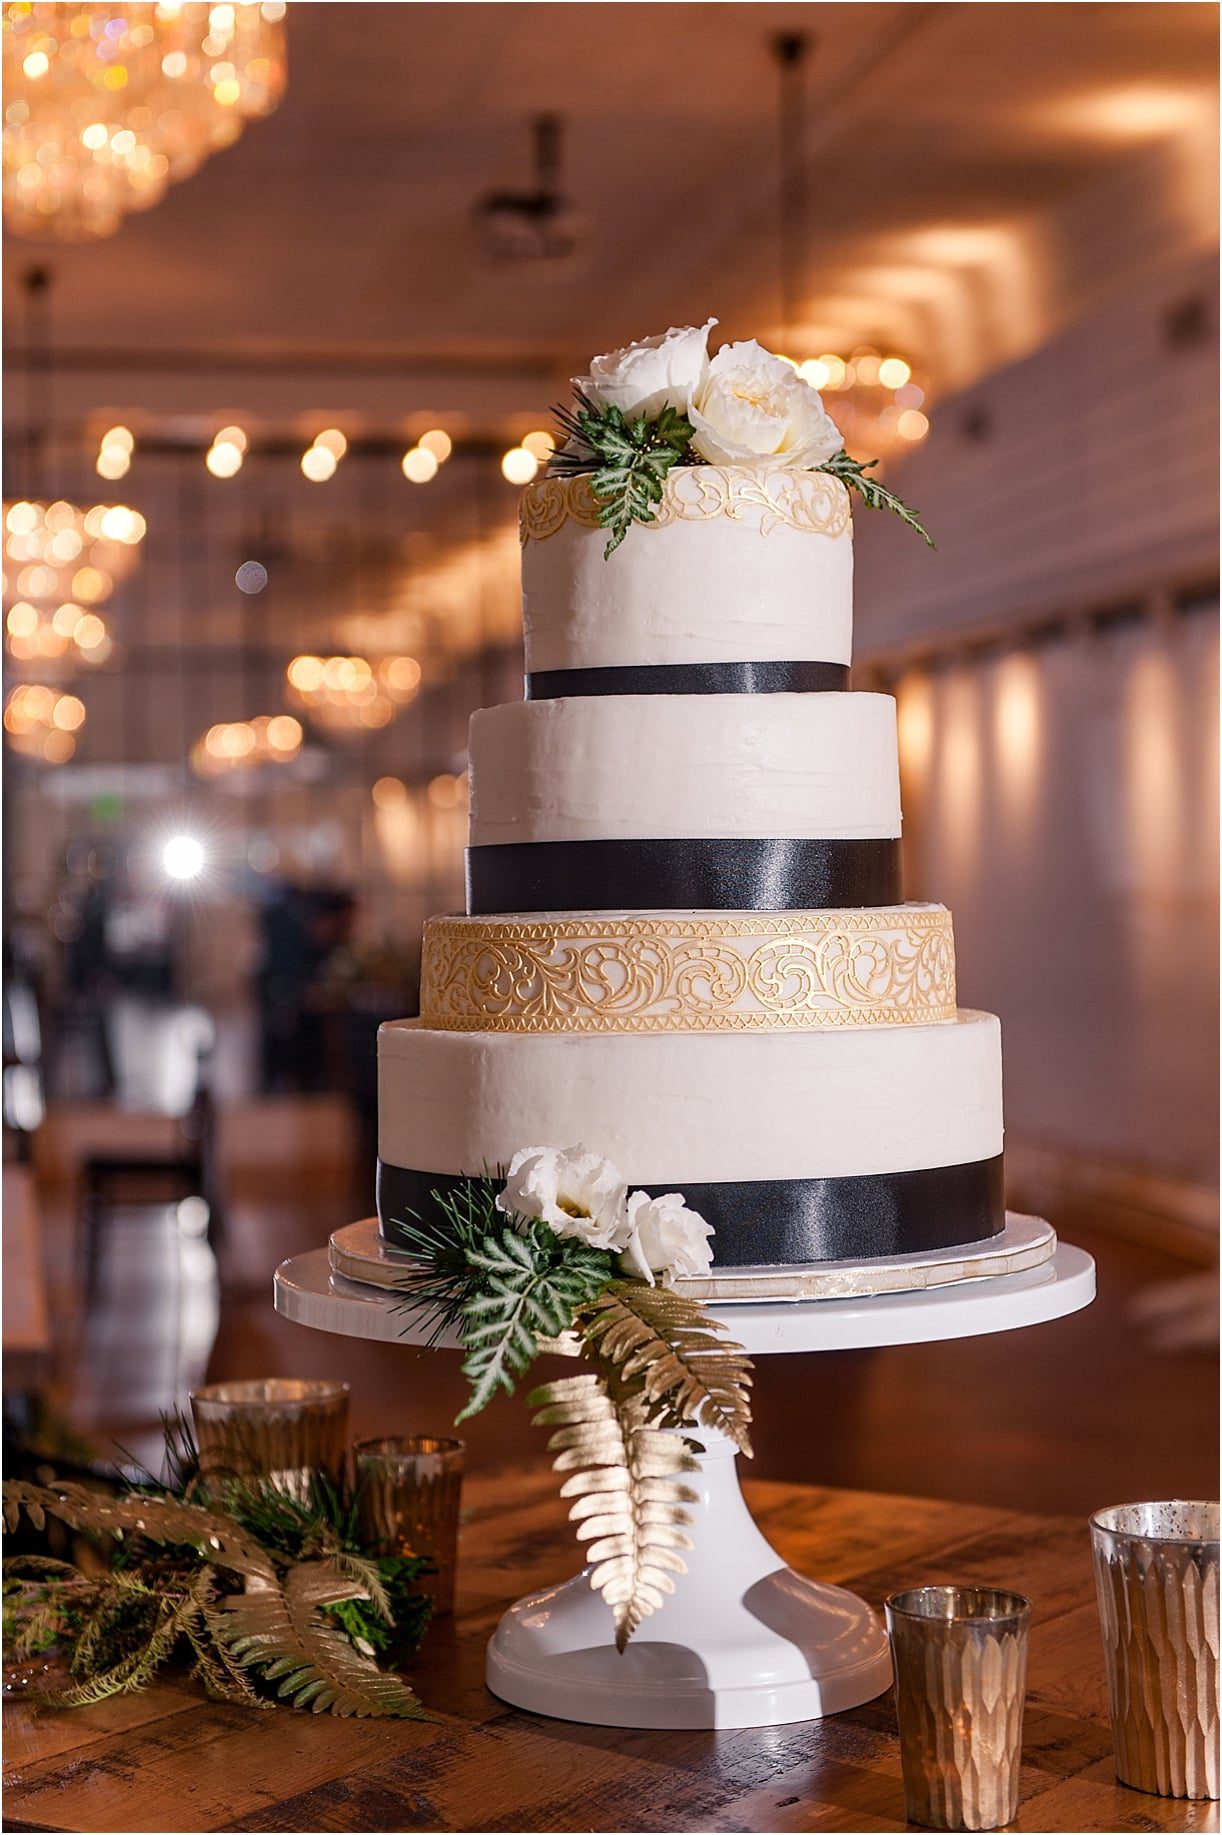 New Year's Eve Wedding Inspiration | Hill City Bride Virginia Wedding Blog - NYE Charlottesville Cake